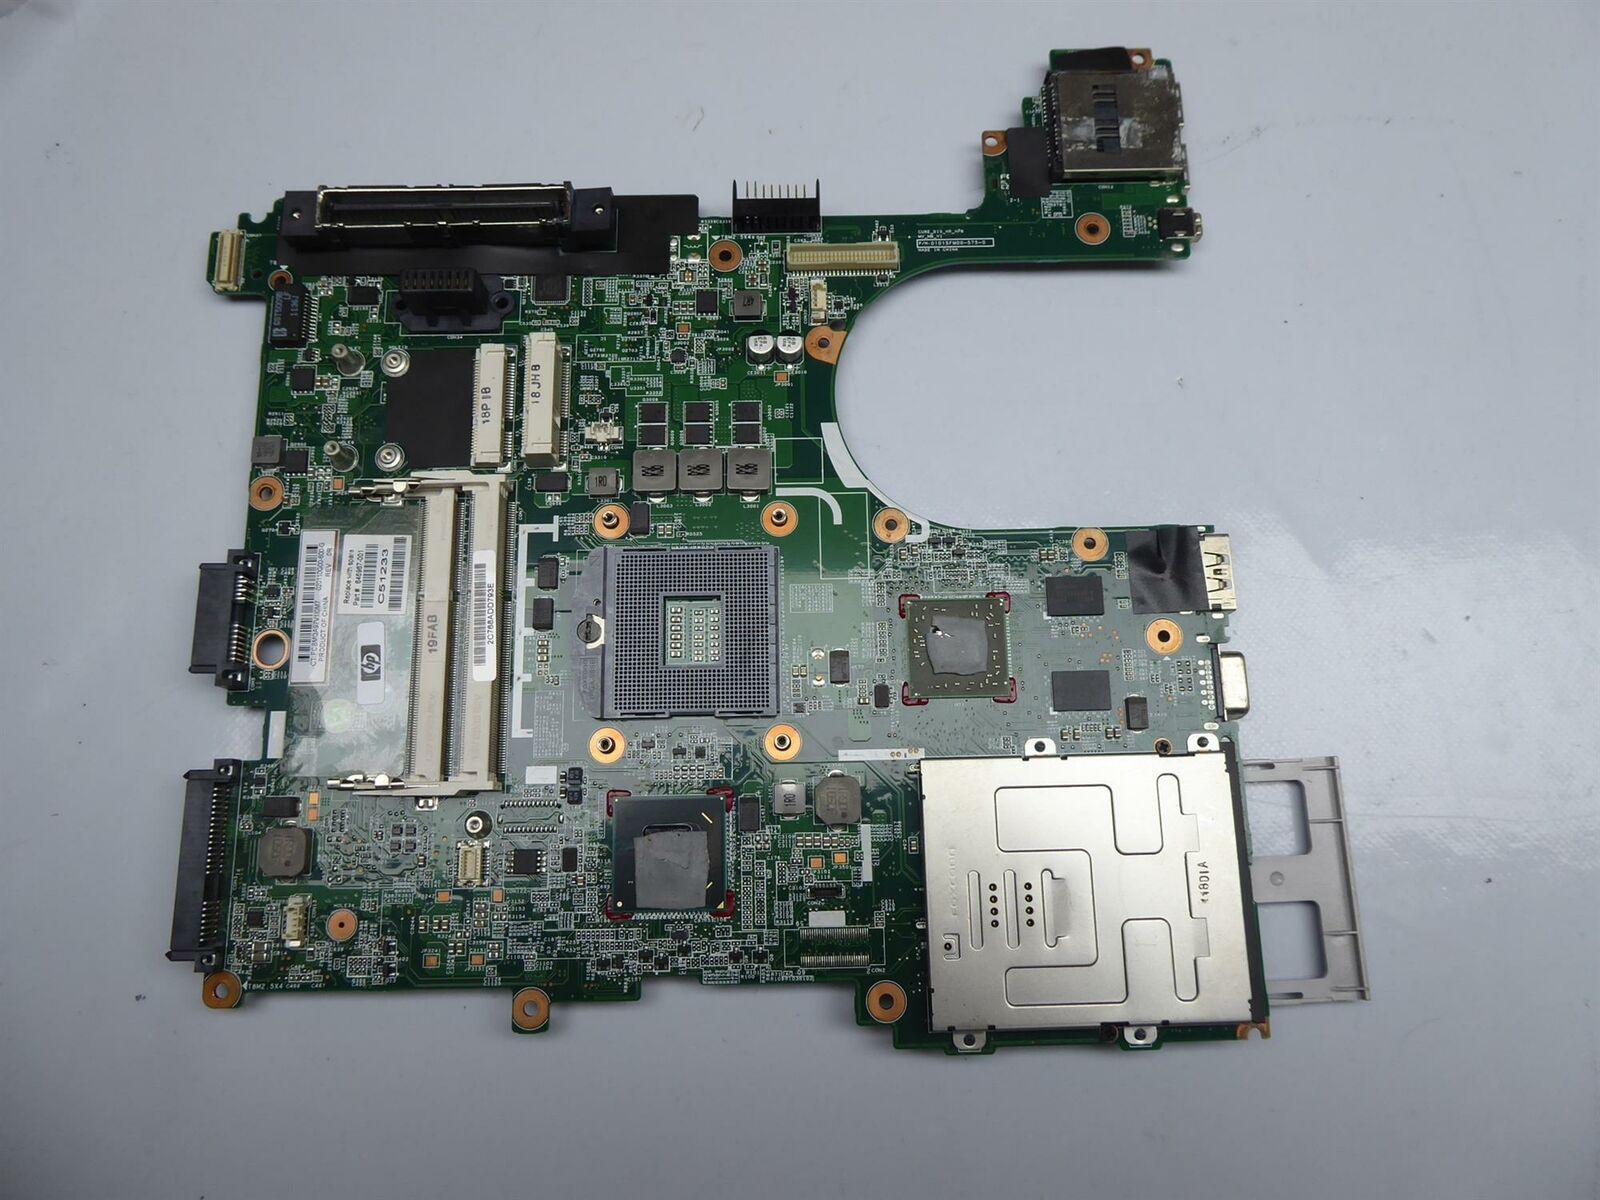 HP EliteBook 8560p Motherboard Motherboard 646967-001 Marke: HP/Compaq Produktart: Mainboard Herstellernumm